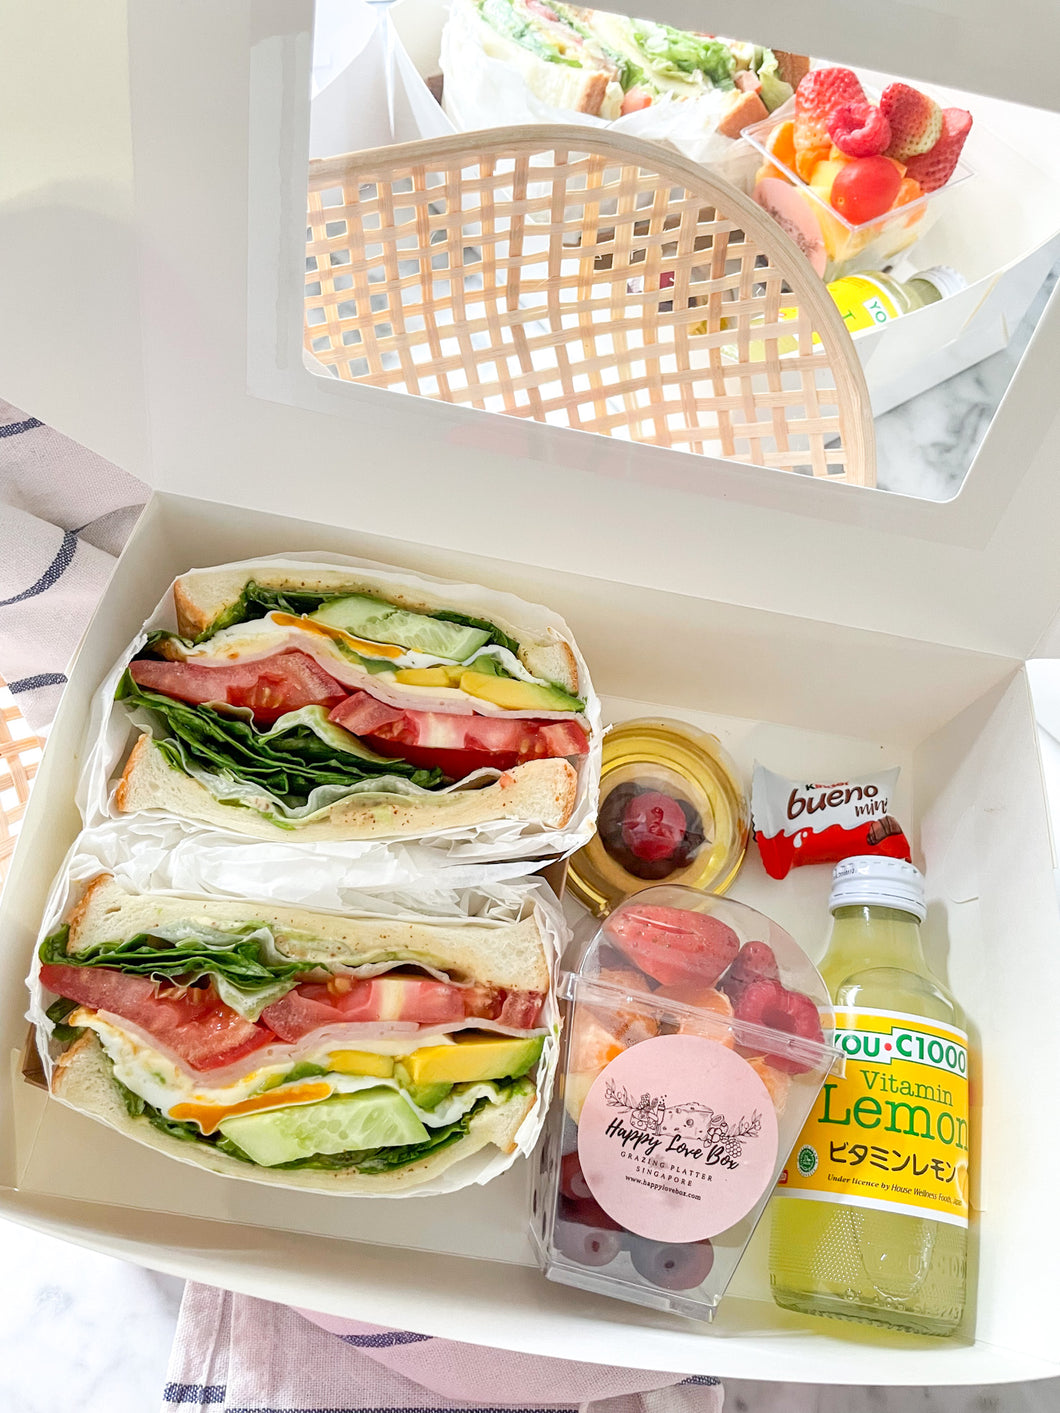 The Happy Club Sandwich Set